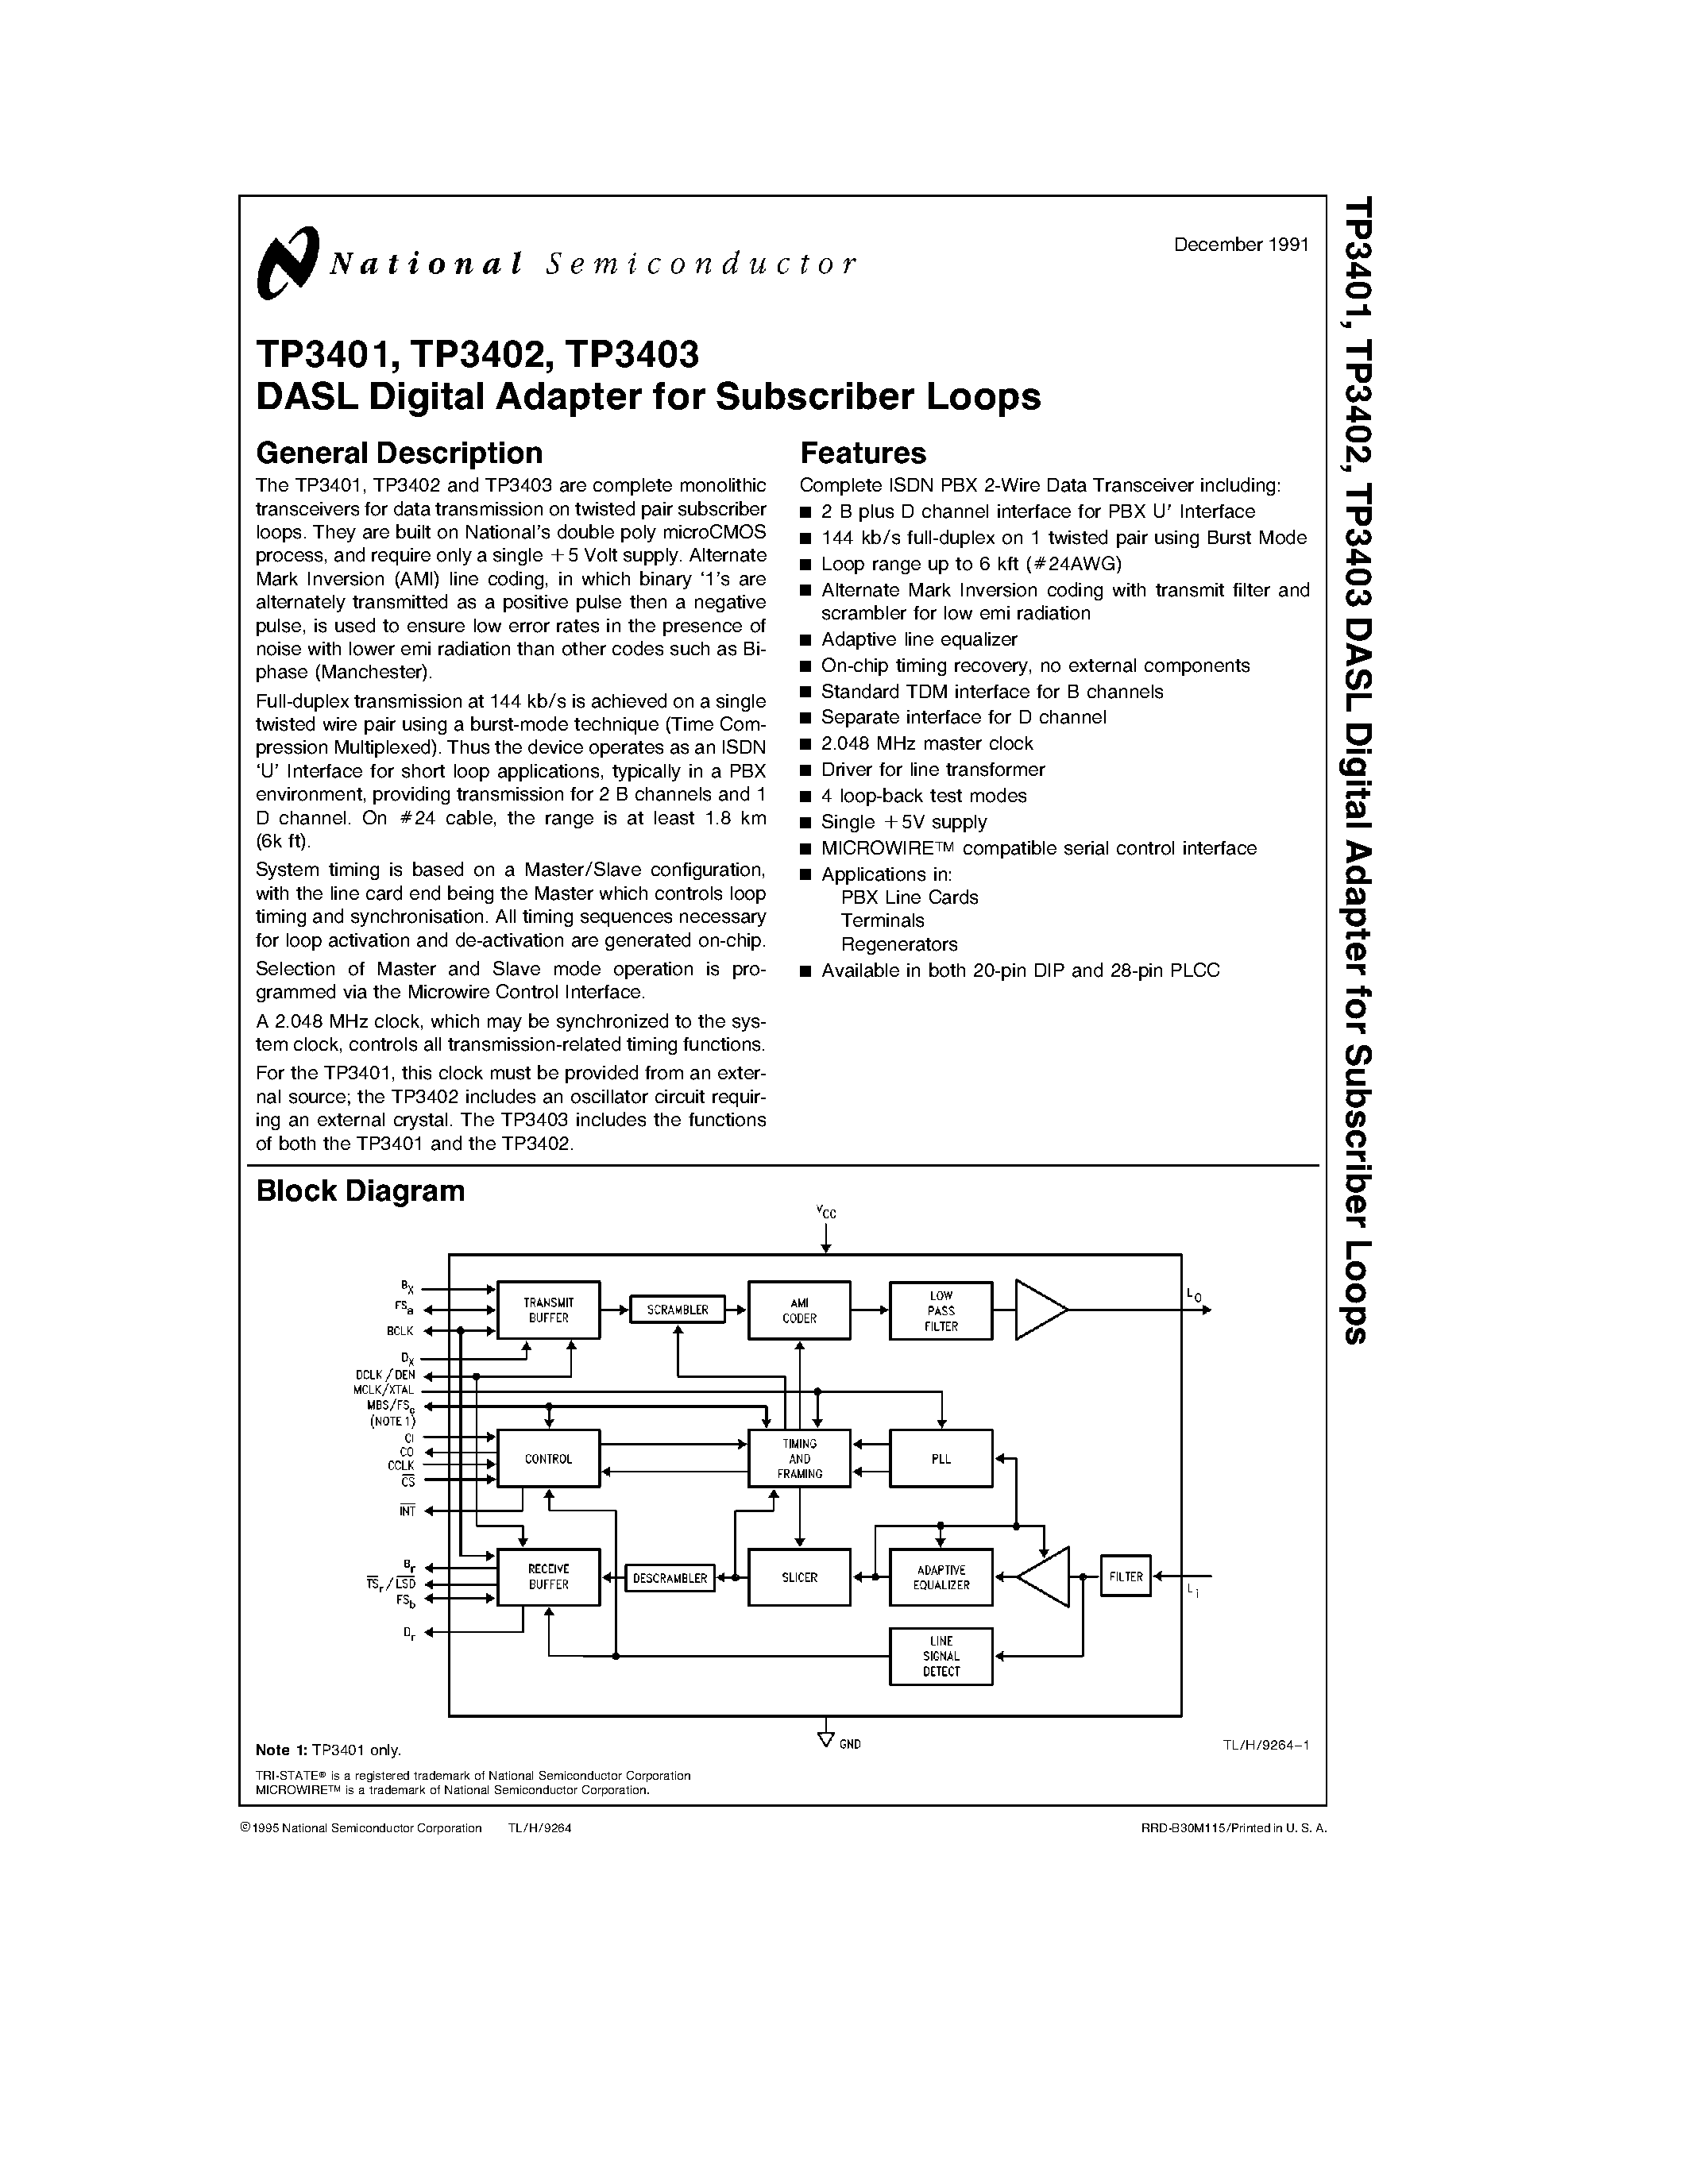 Даташит TP3401 - DASL Digital Adapter for Subscriber Loops страница 1